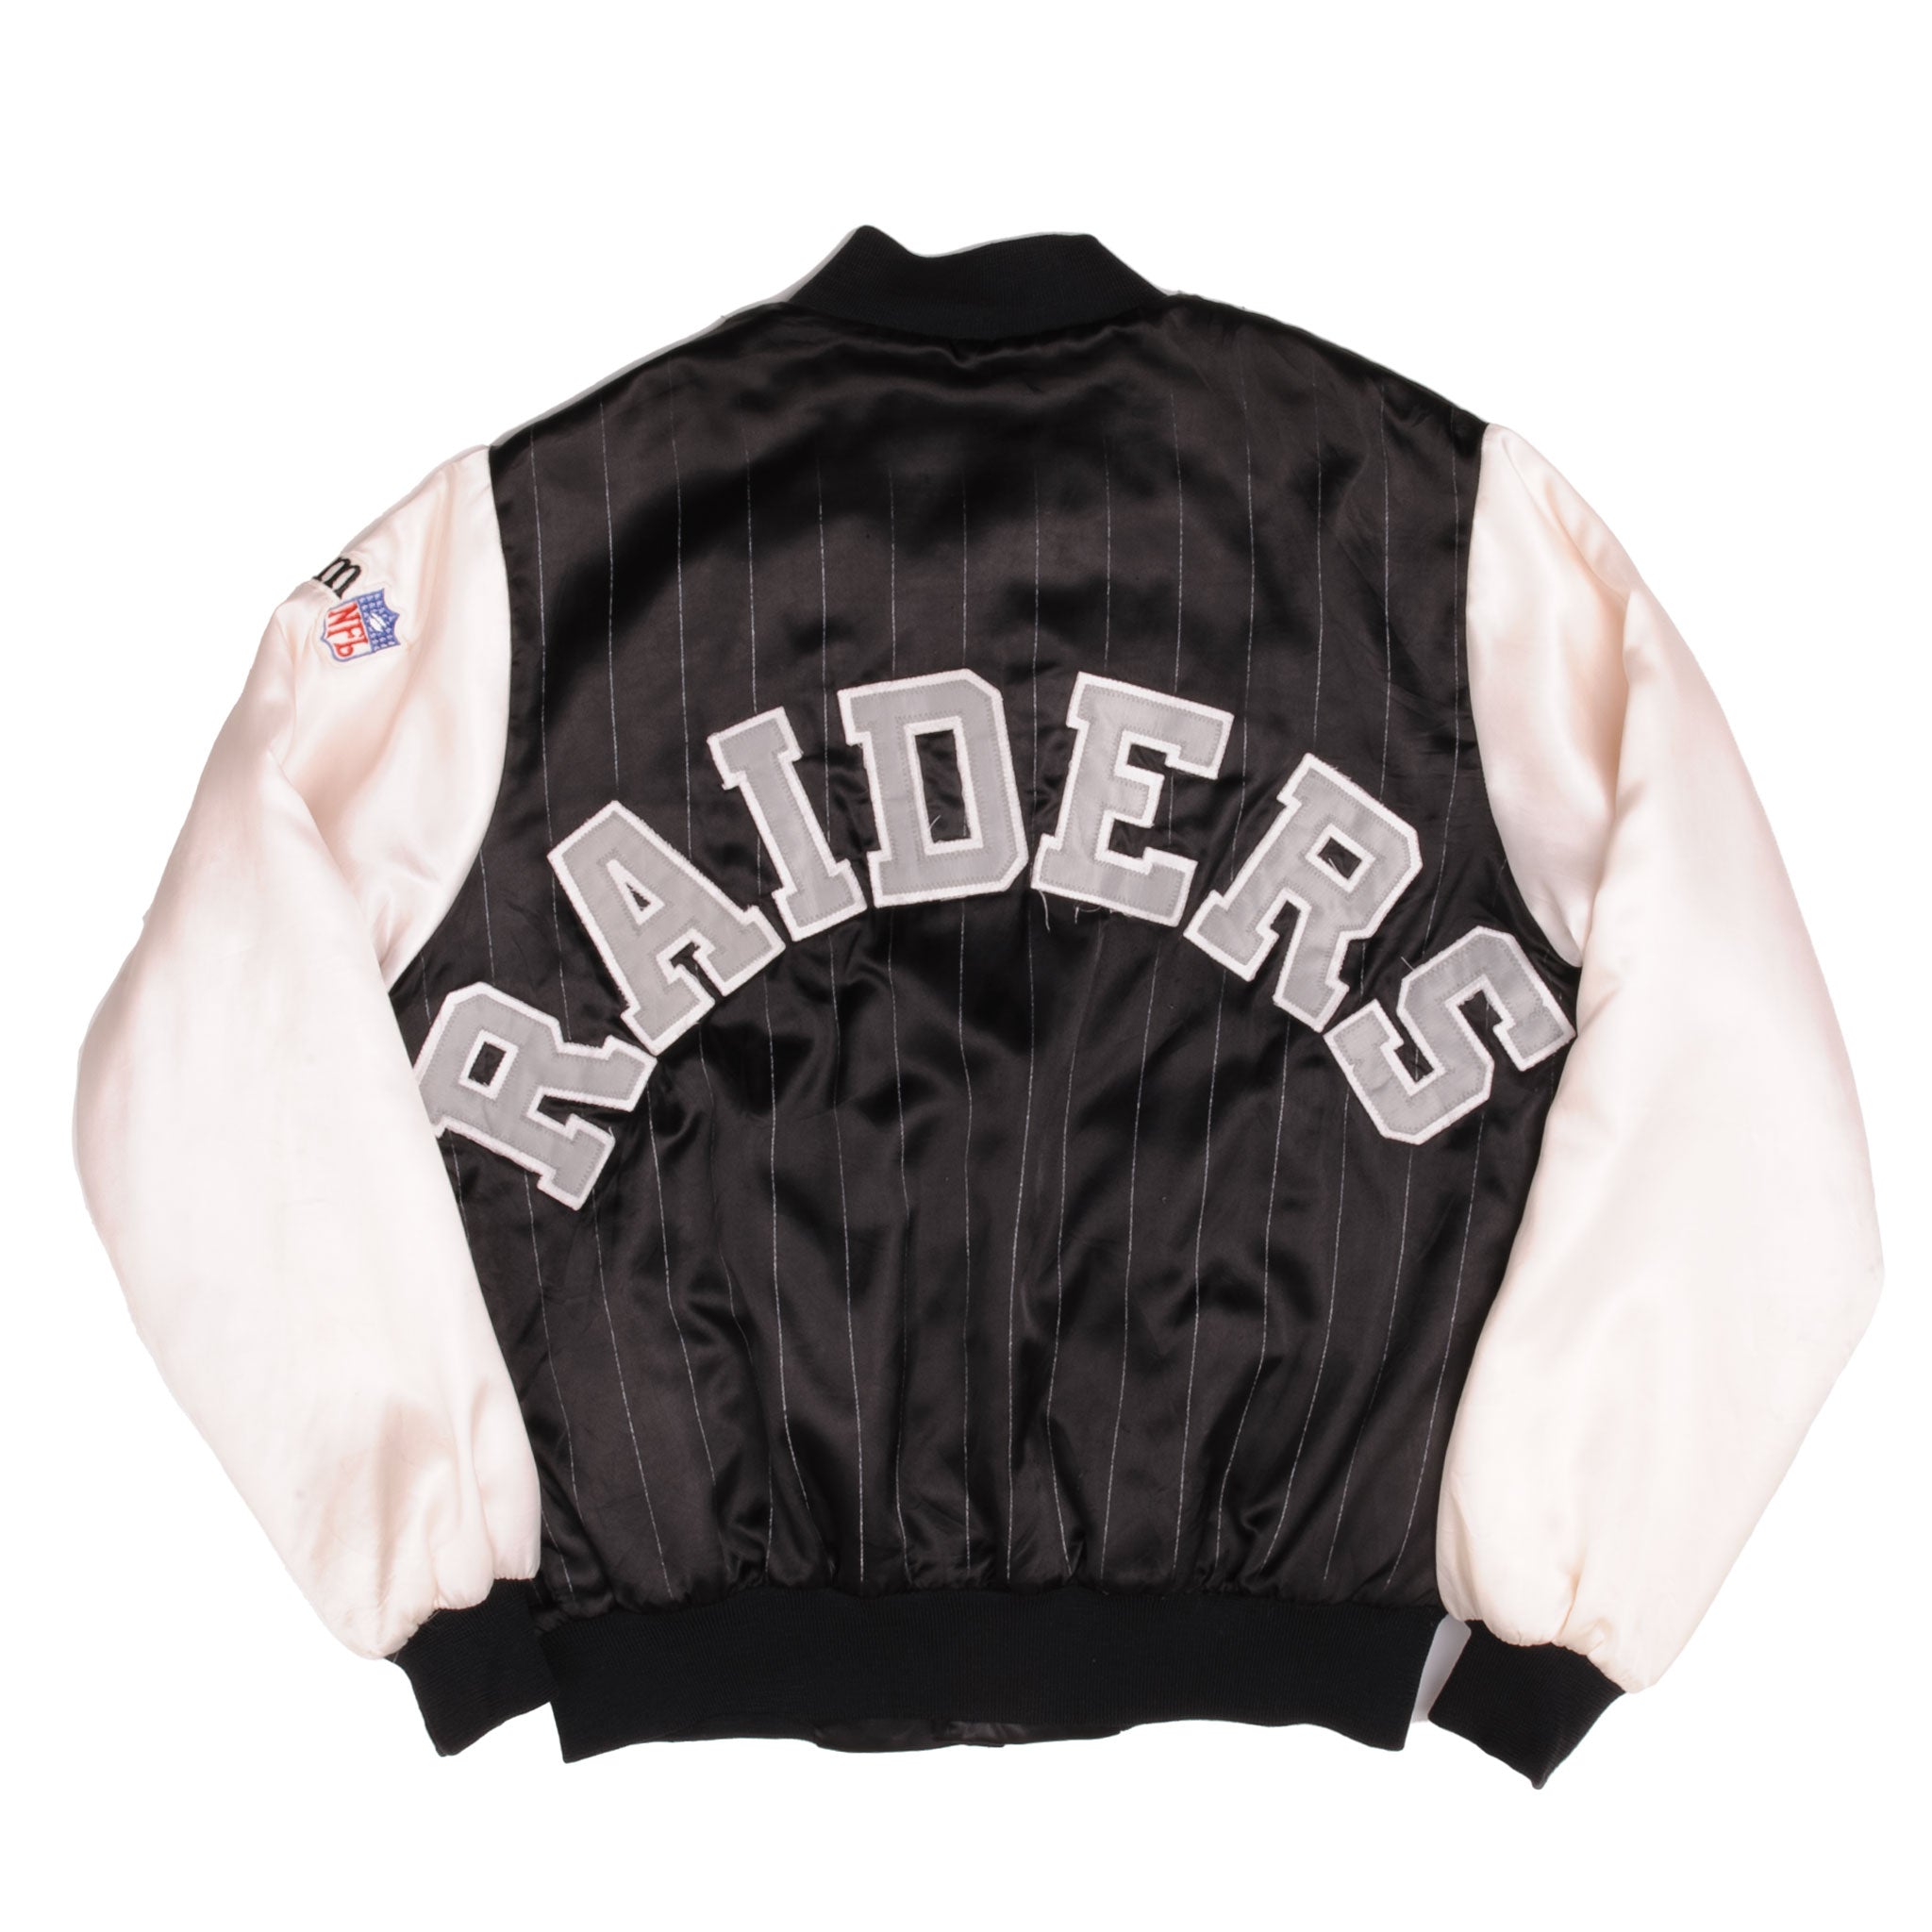 Oakland Raiders Vintage Starter Jersey L Rare Cursive 90s Los 